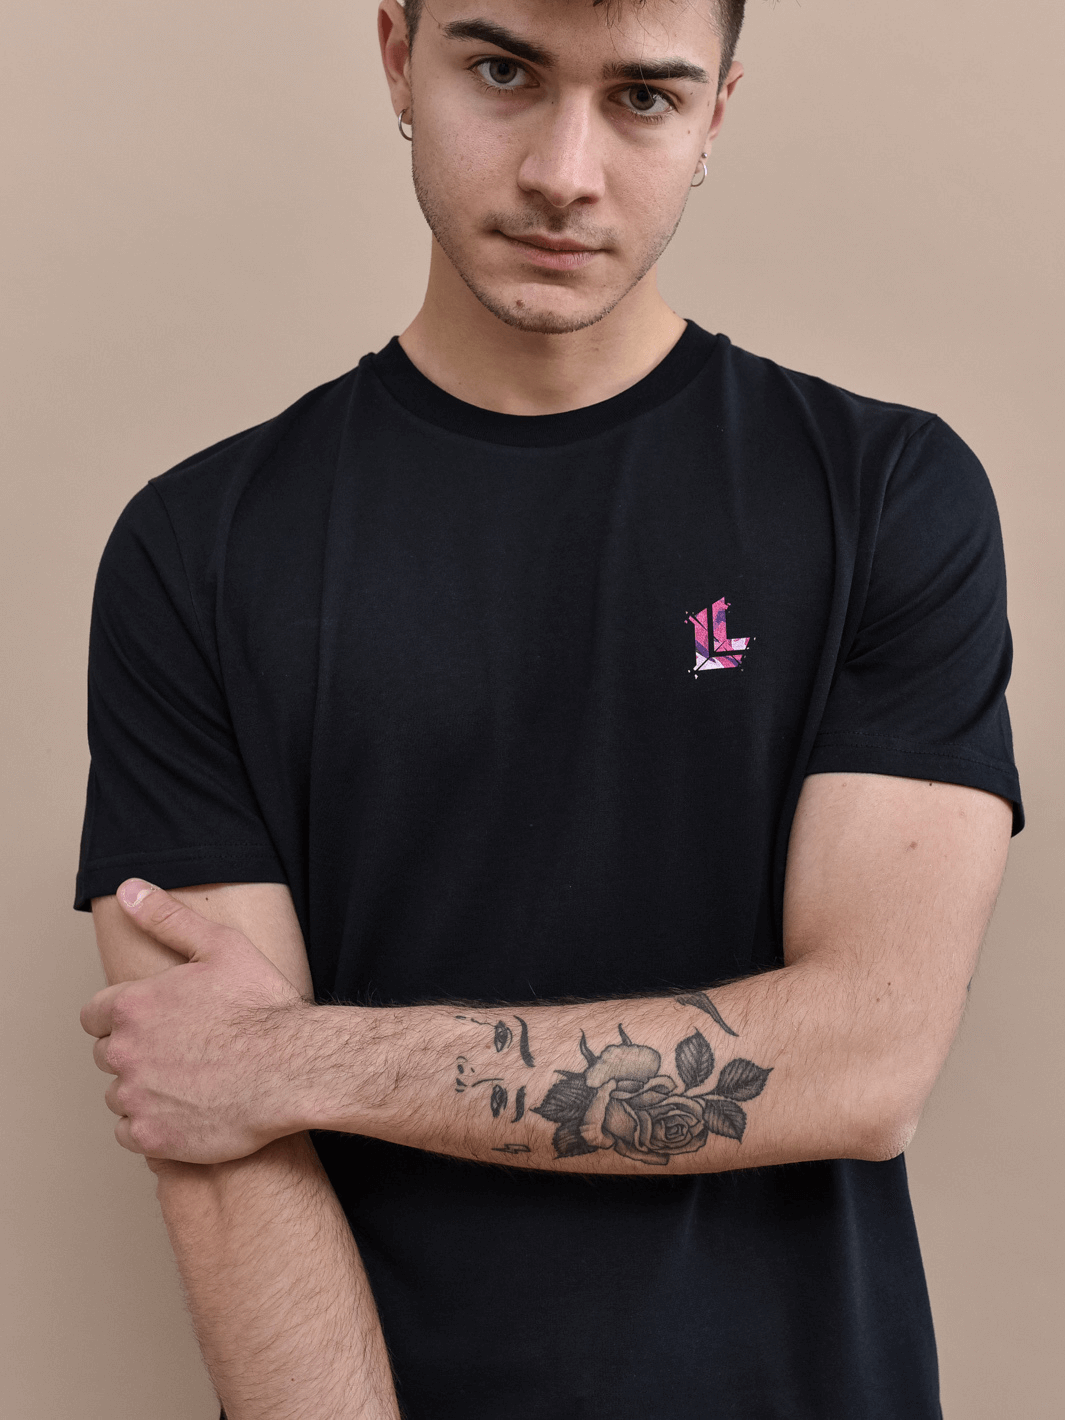 T-shirt essential nera Limitlex stampa logo lato cuore.